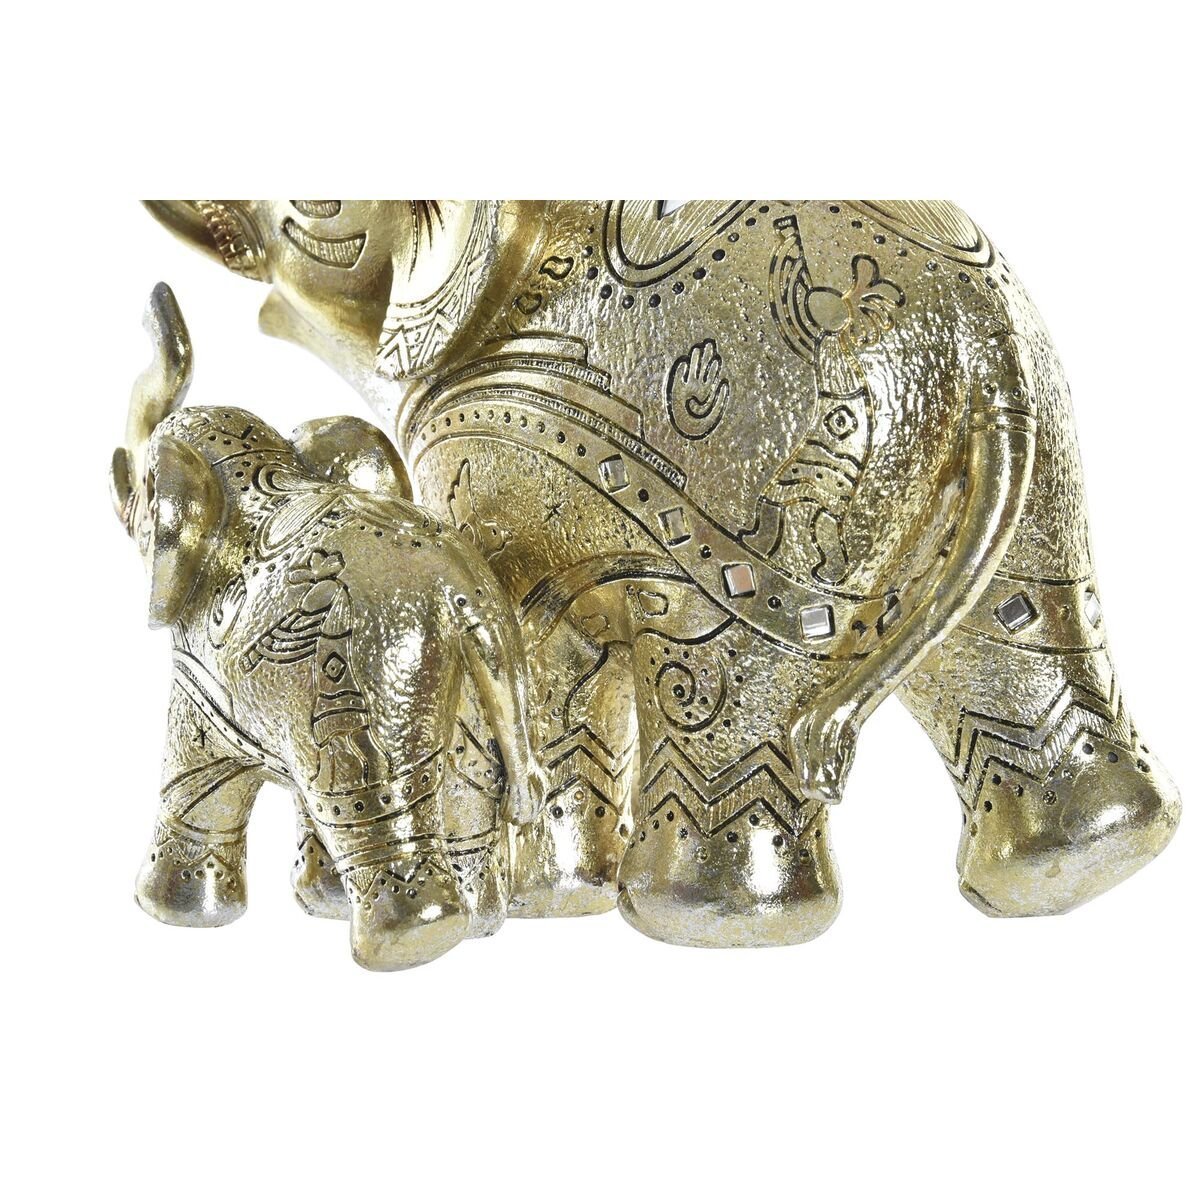 Familie gylden elefant 17 x 11 x 15 cm